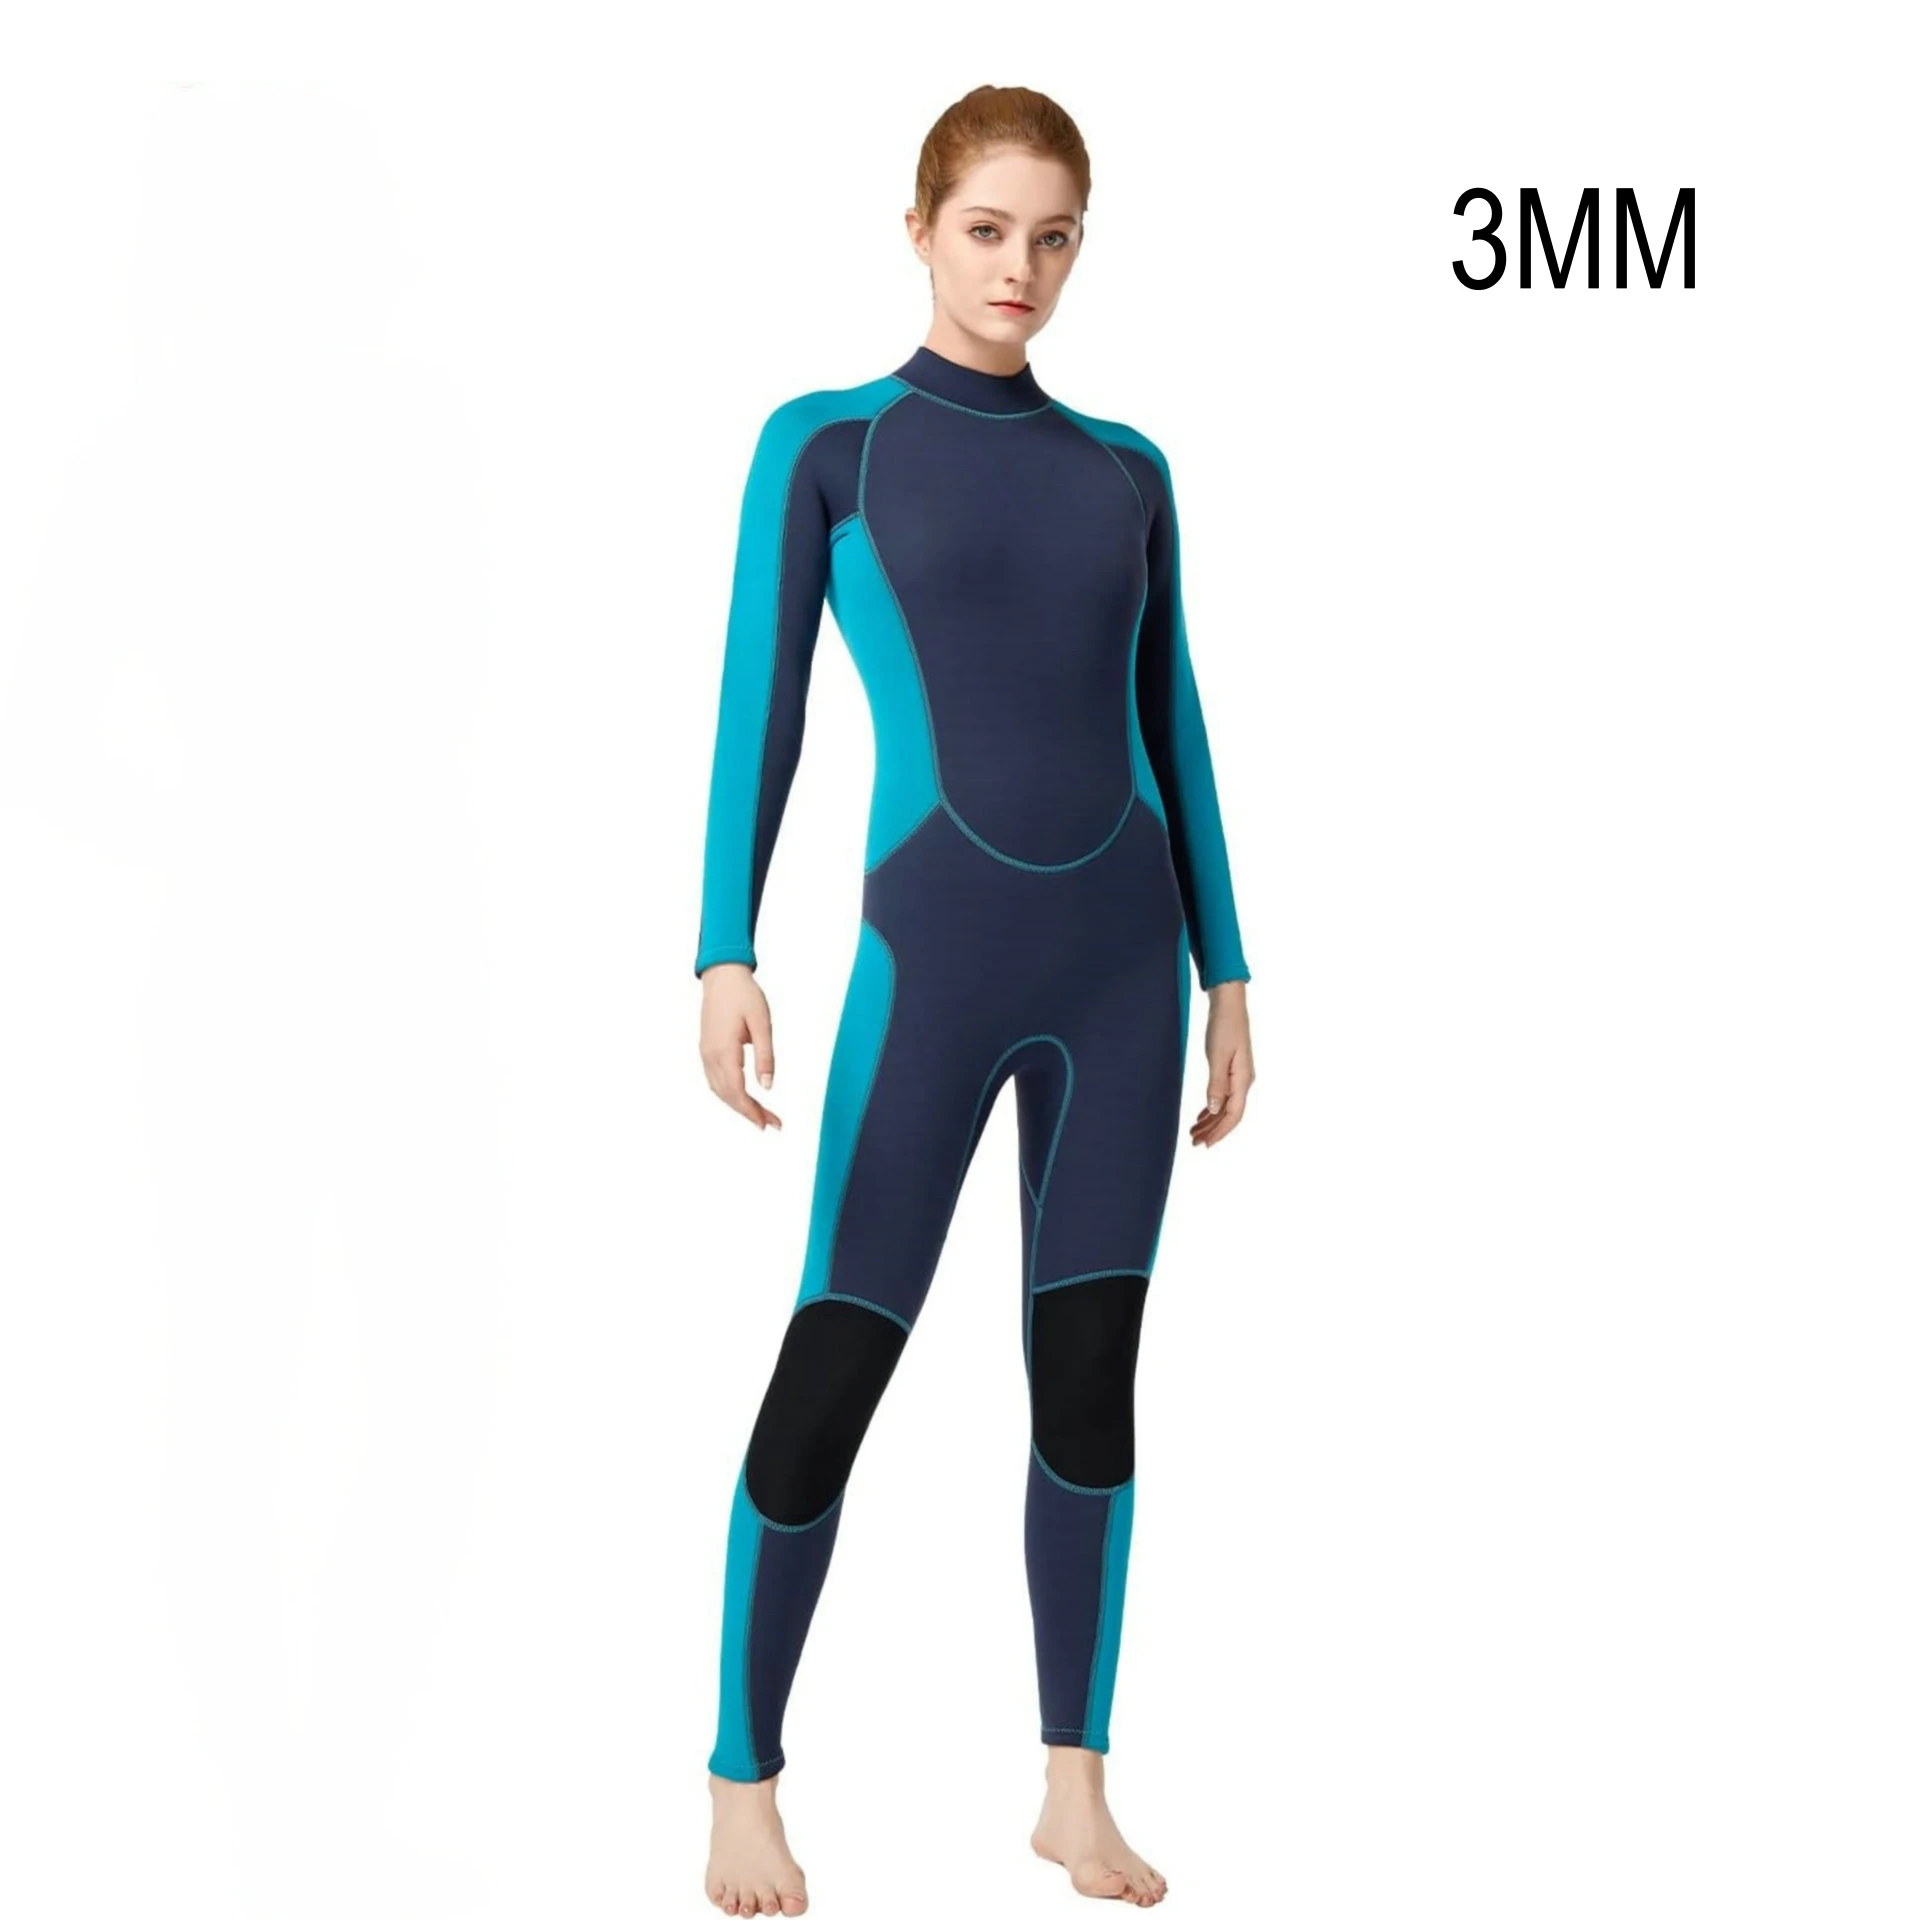 neoprene-scuba-diving-suit-manter-quente-corpo-inteiro-snorkeling-caca-subaquatica-caiaque-natacao-surf-3mm